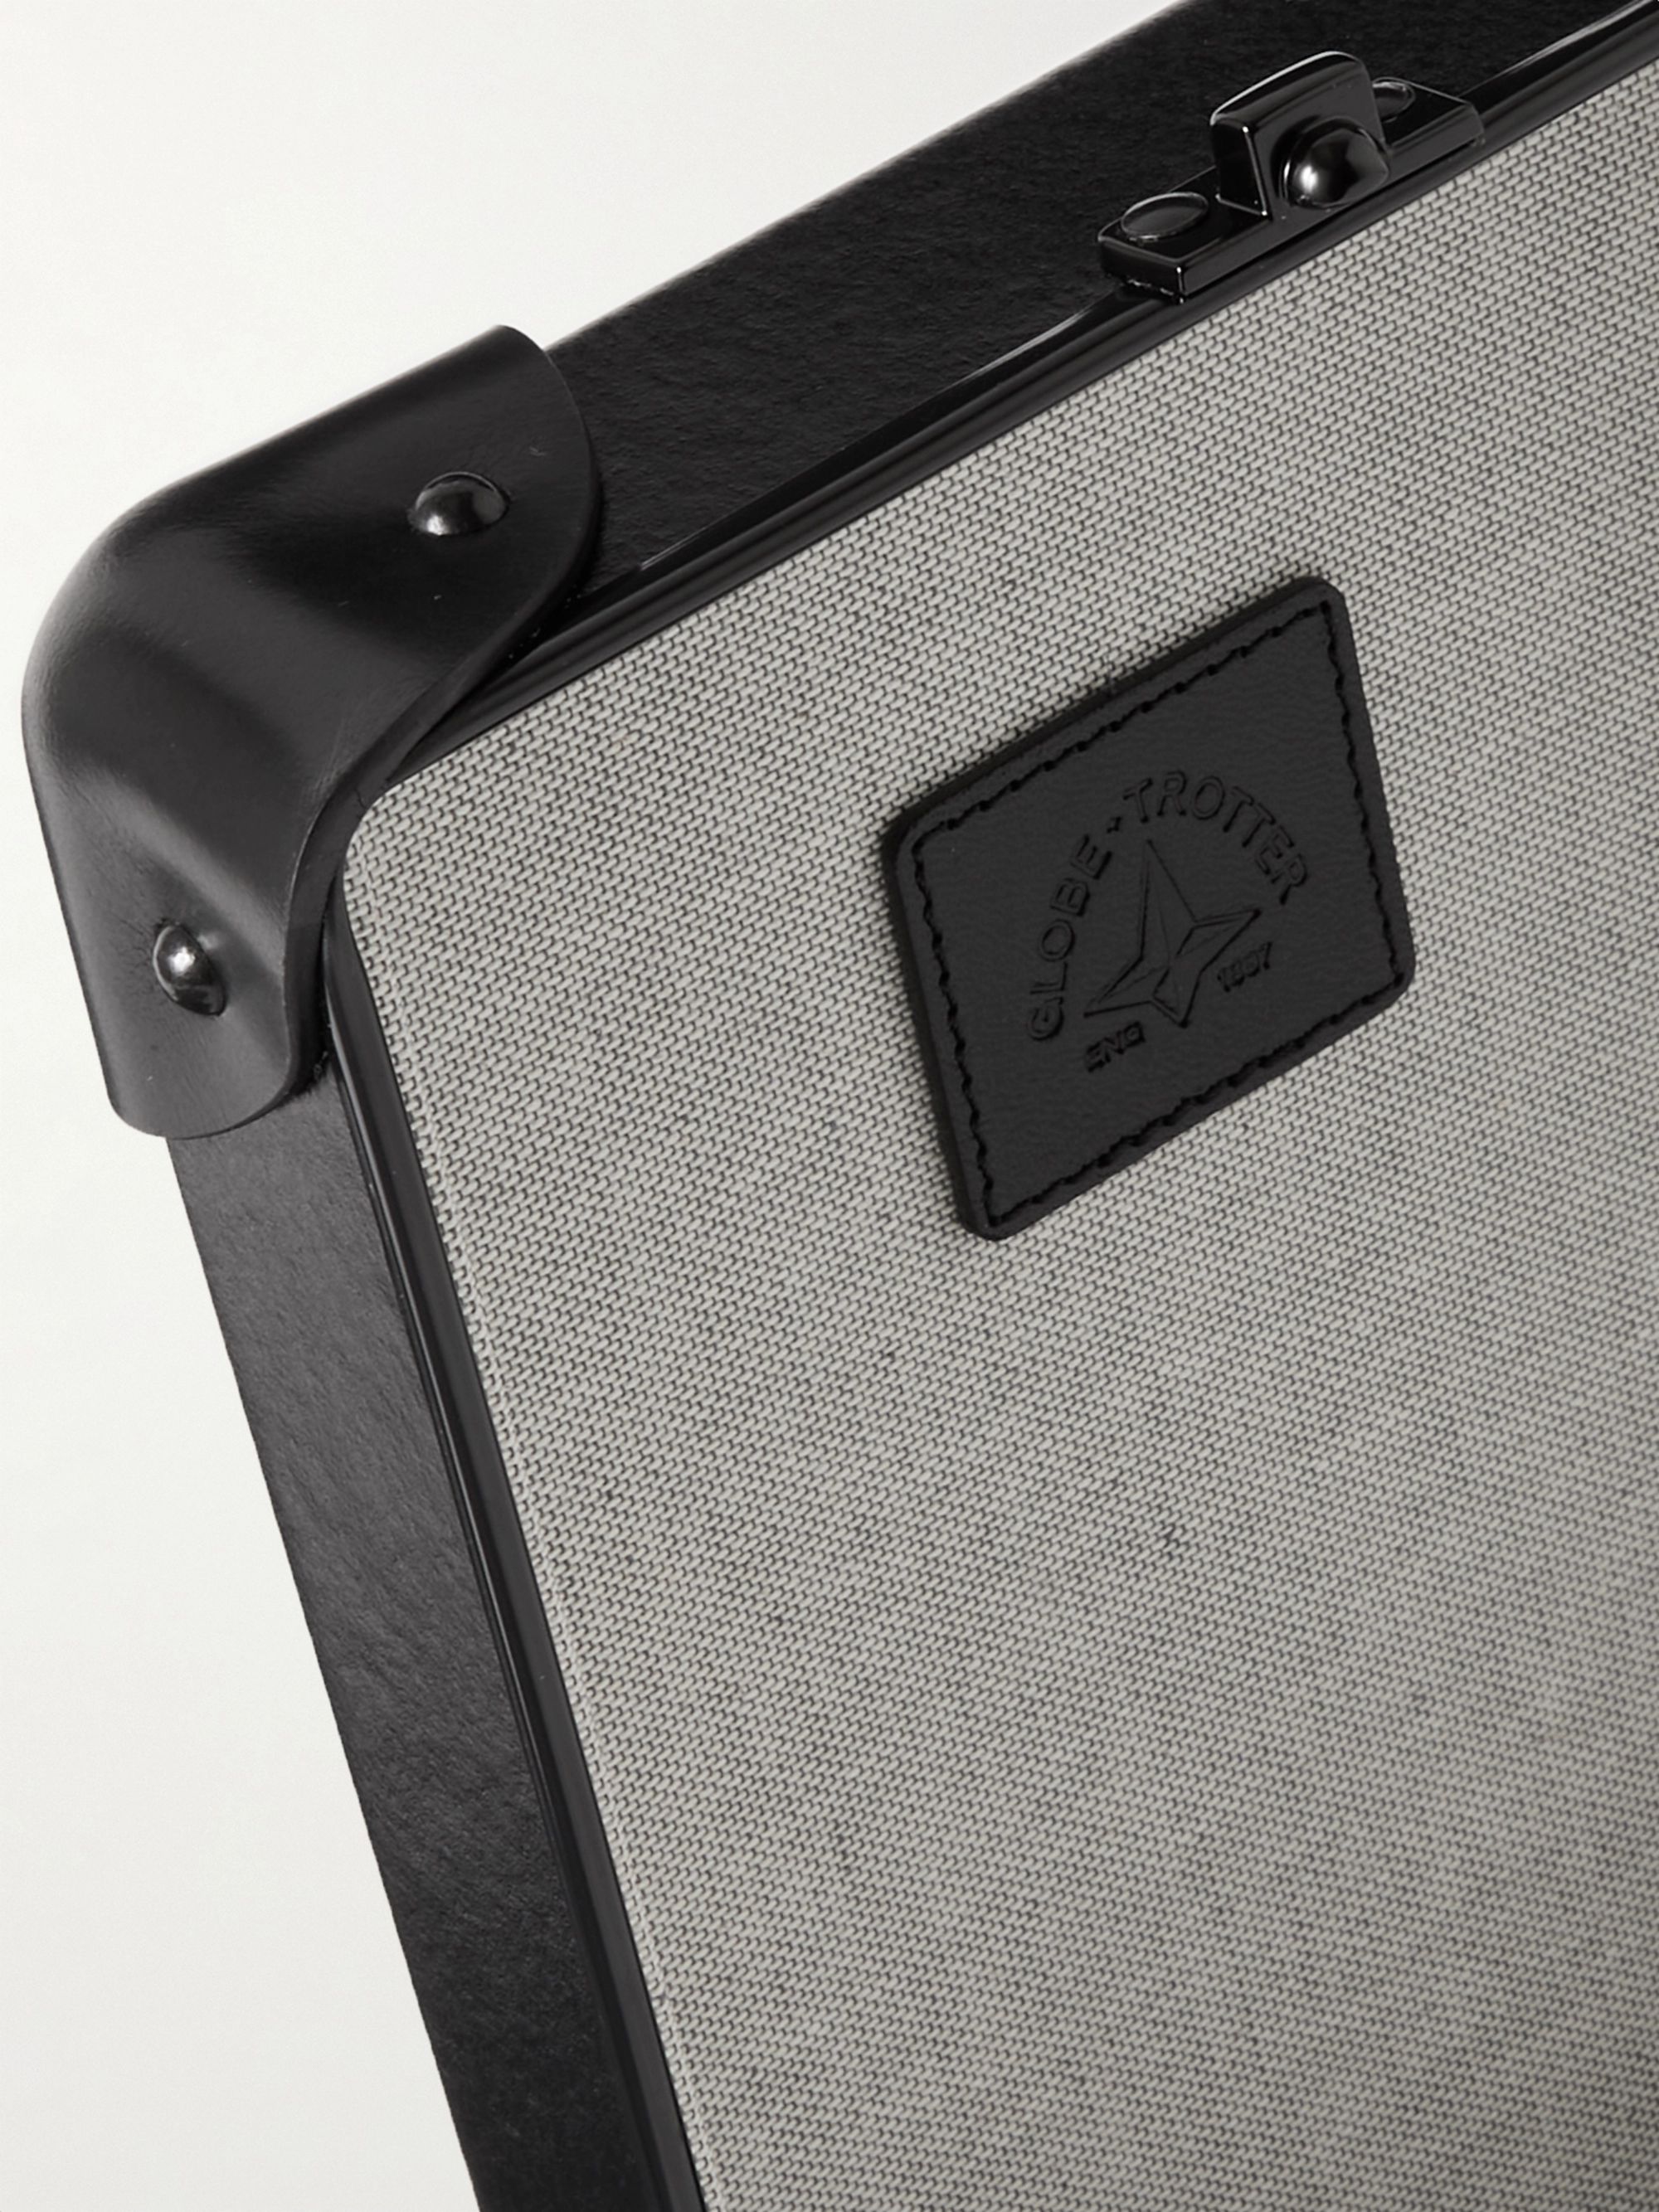 GLOBE-TROTTER Centenary Leather-Trimmed Vulcanised Fibreboard Three-Piece Watch Box